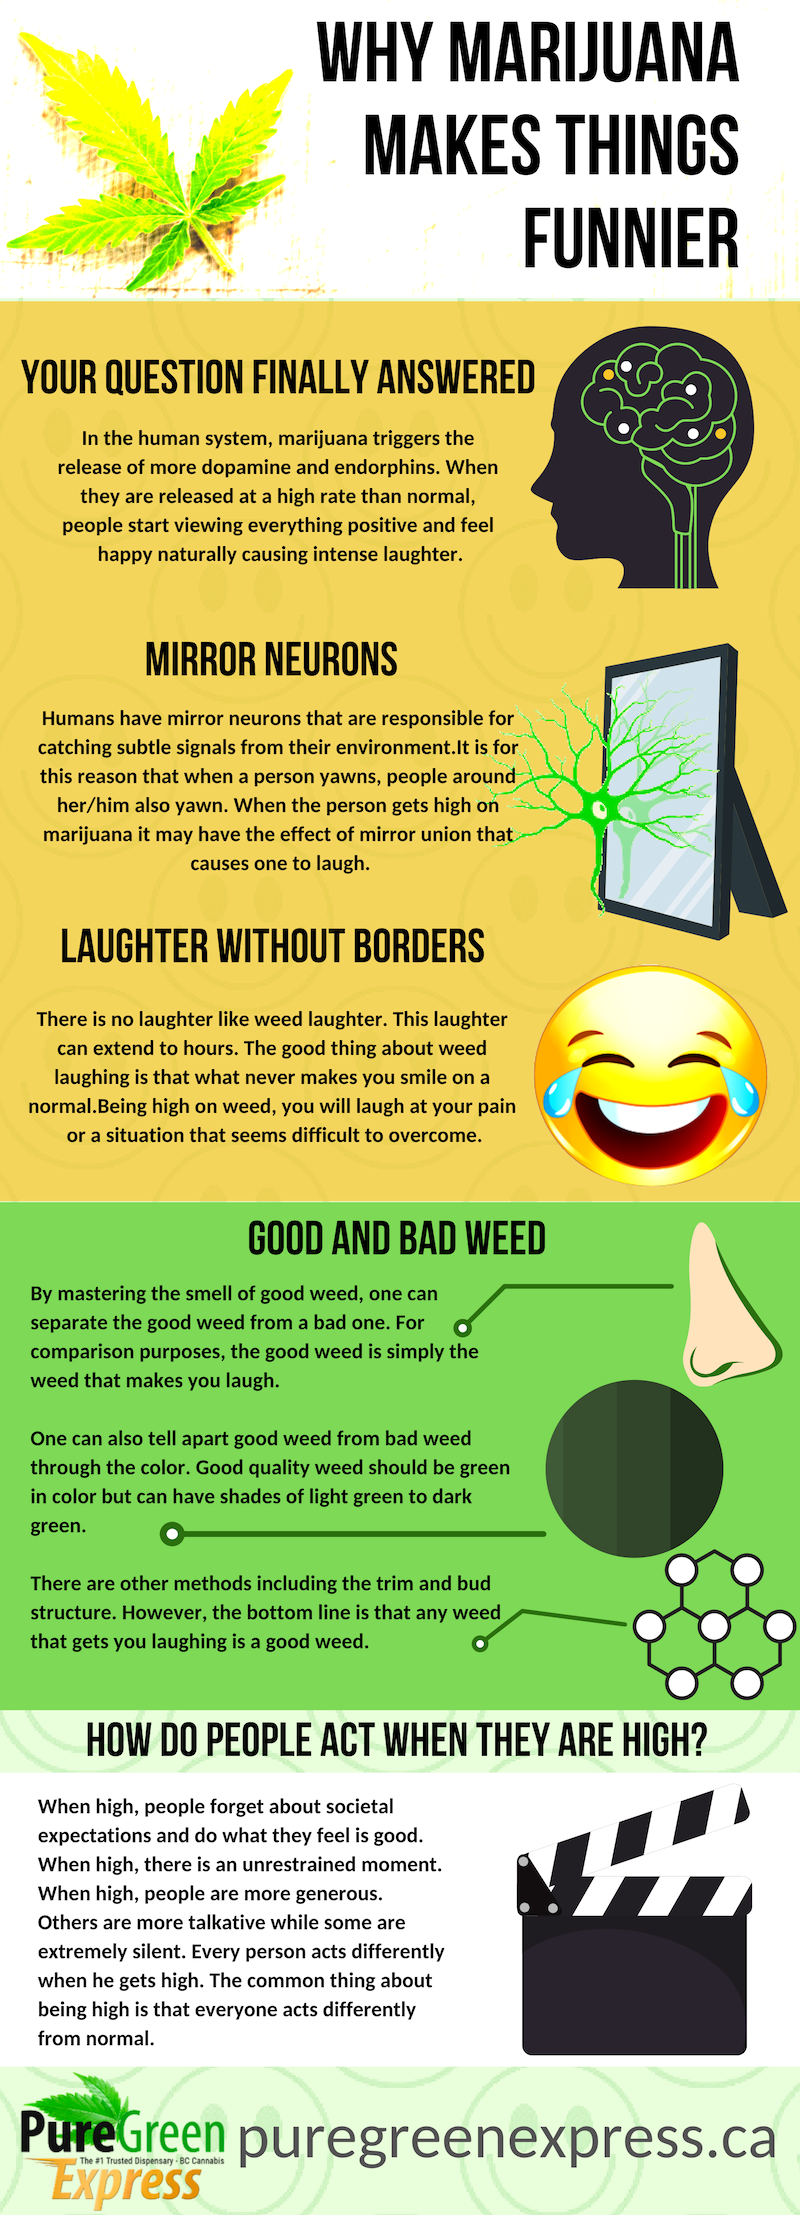 Why Marijuana Makes Things Funnier